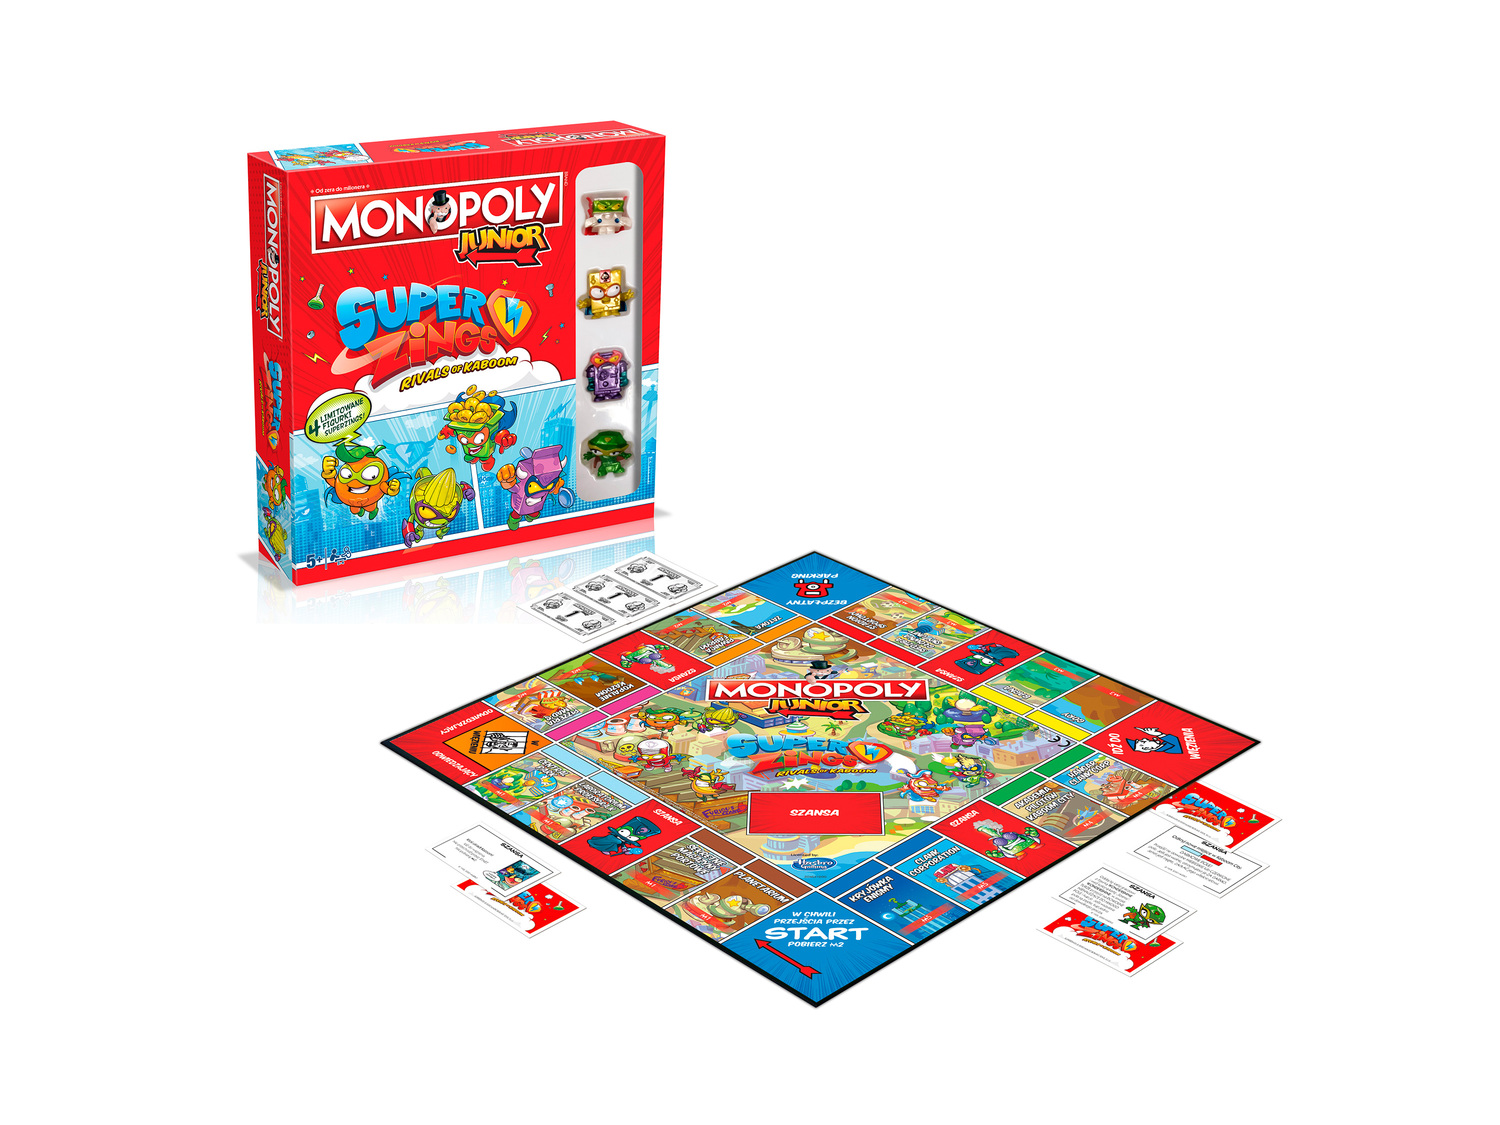 Monopoly Junior Super Zings , cena 79,90 PLN 
- 
Monopoly Junior Super Zings ...